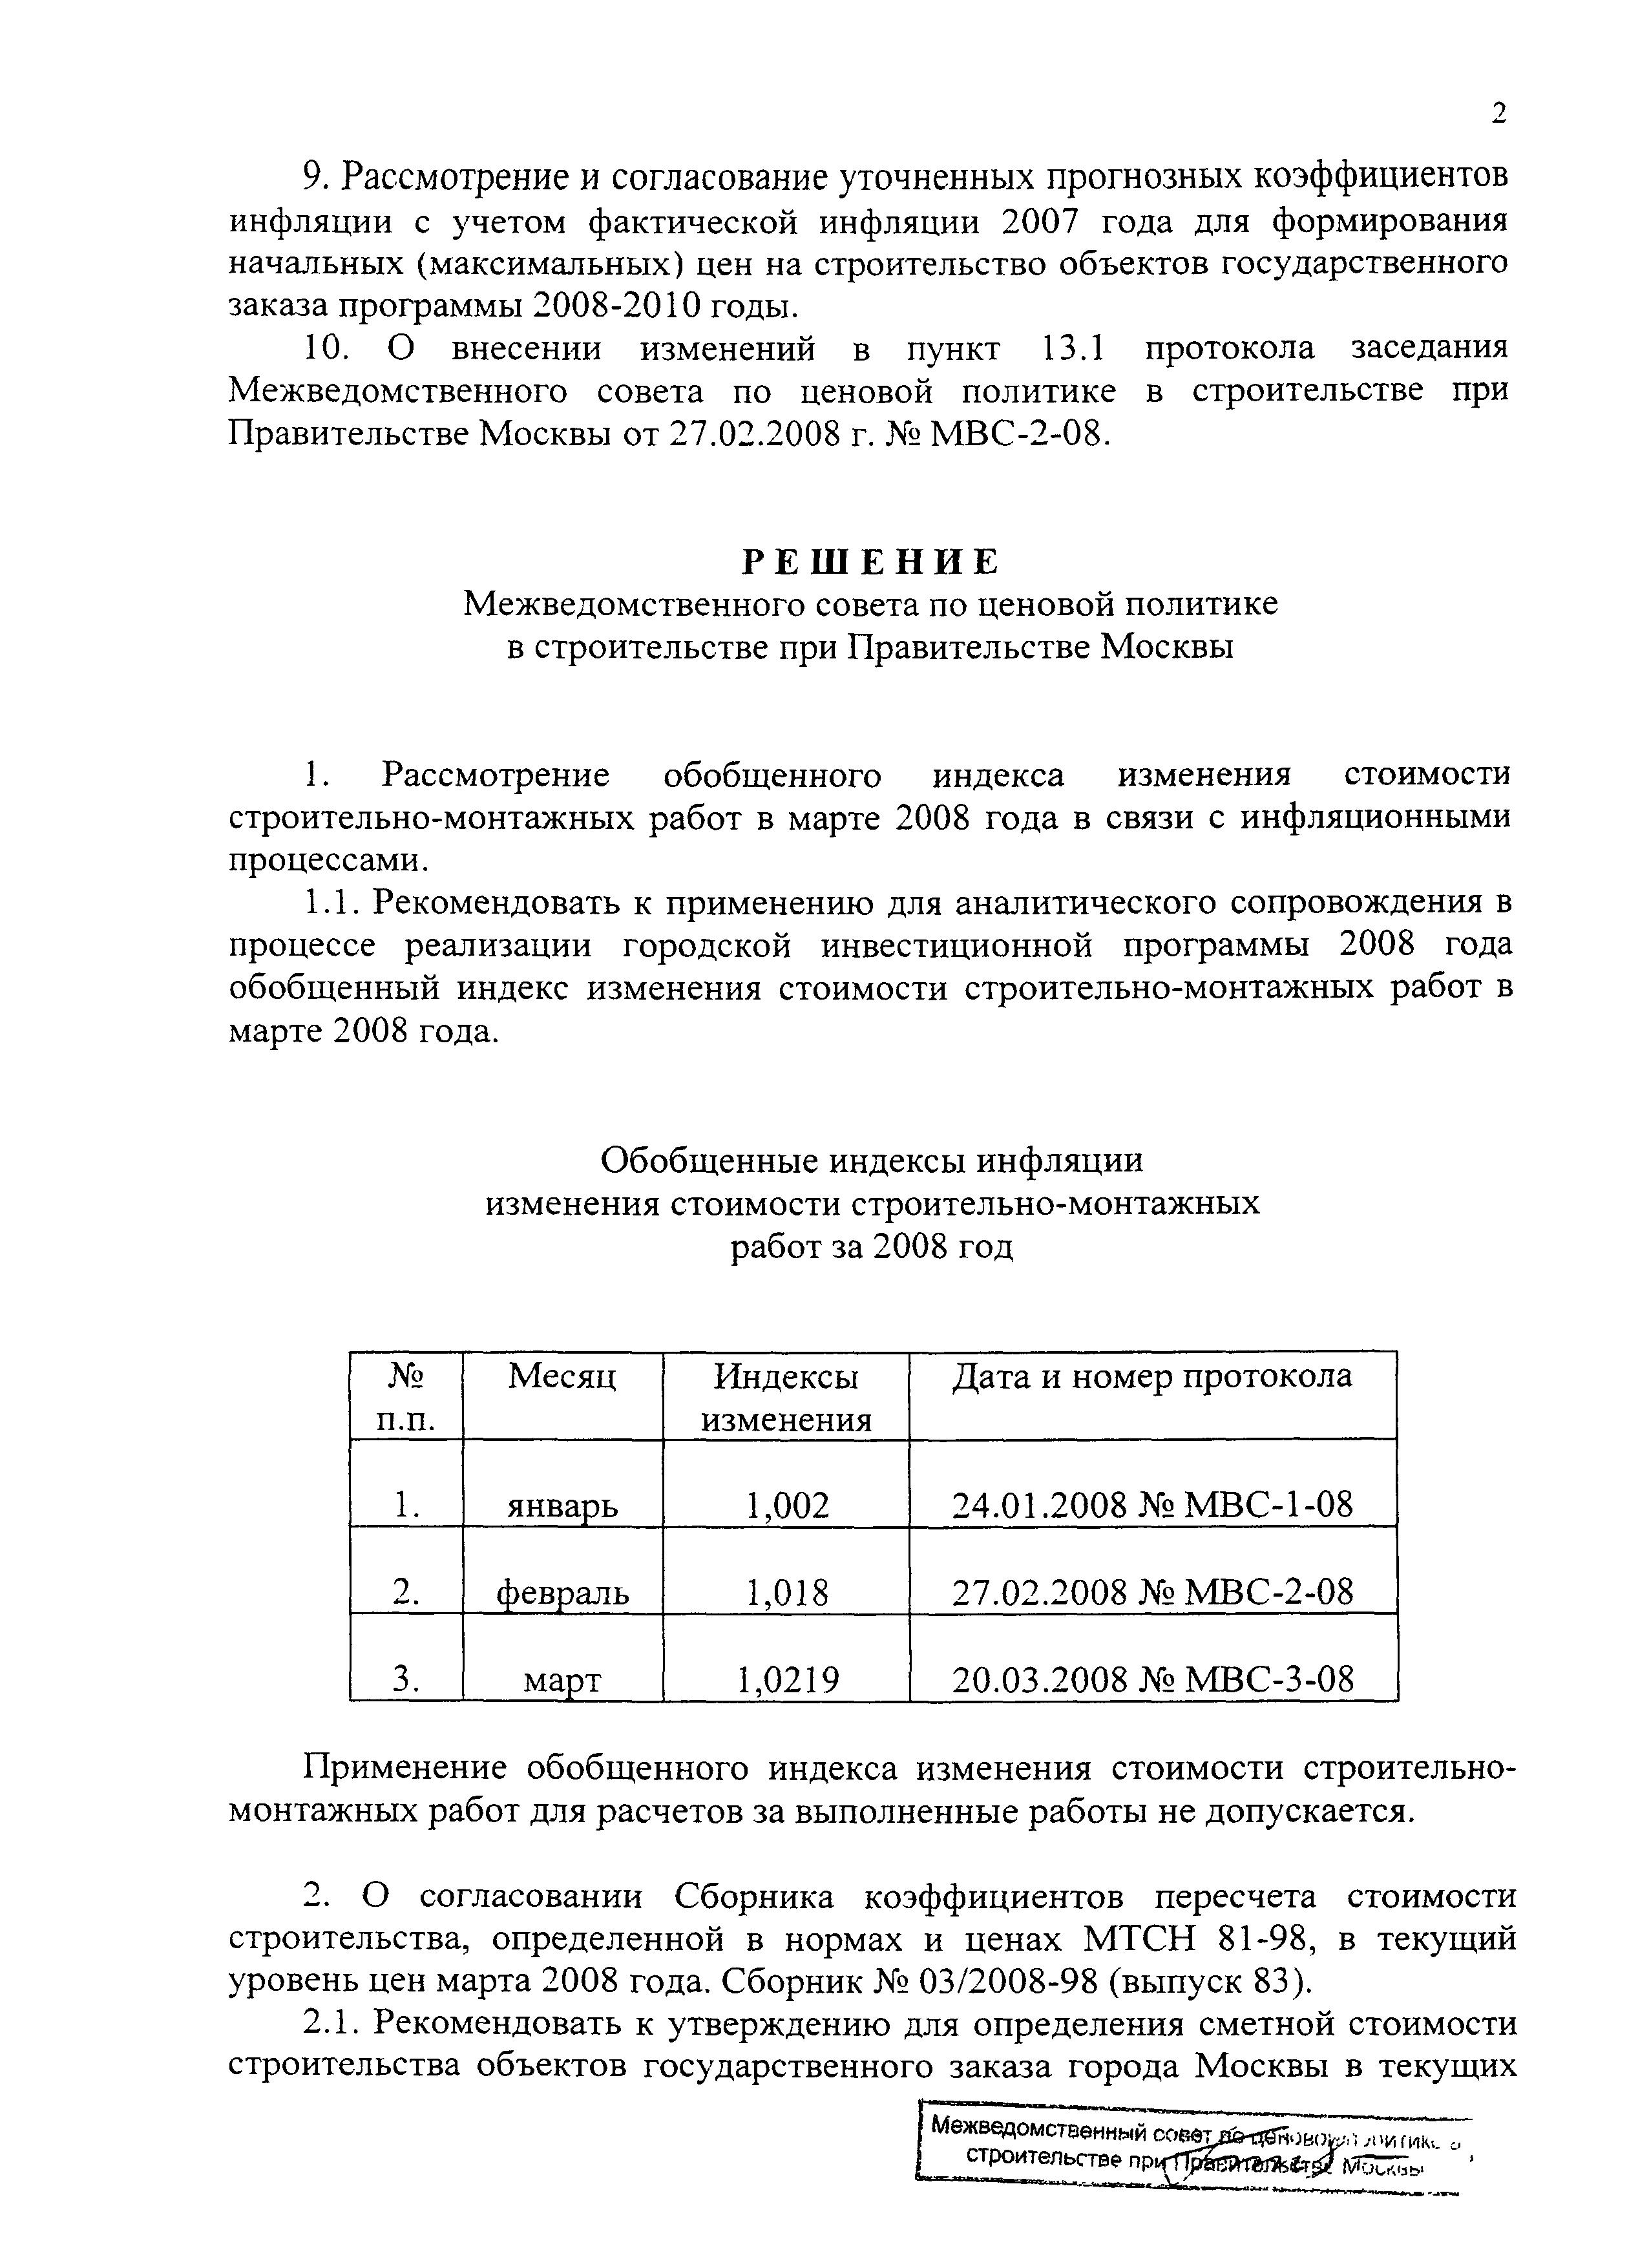 Протокол МВС-3-08